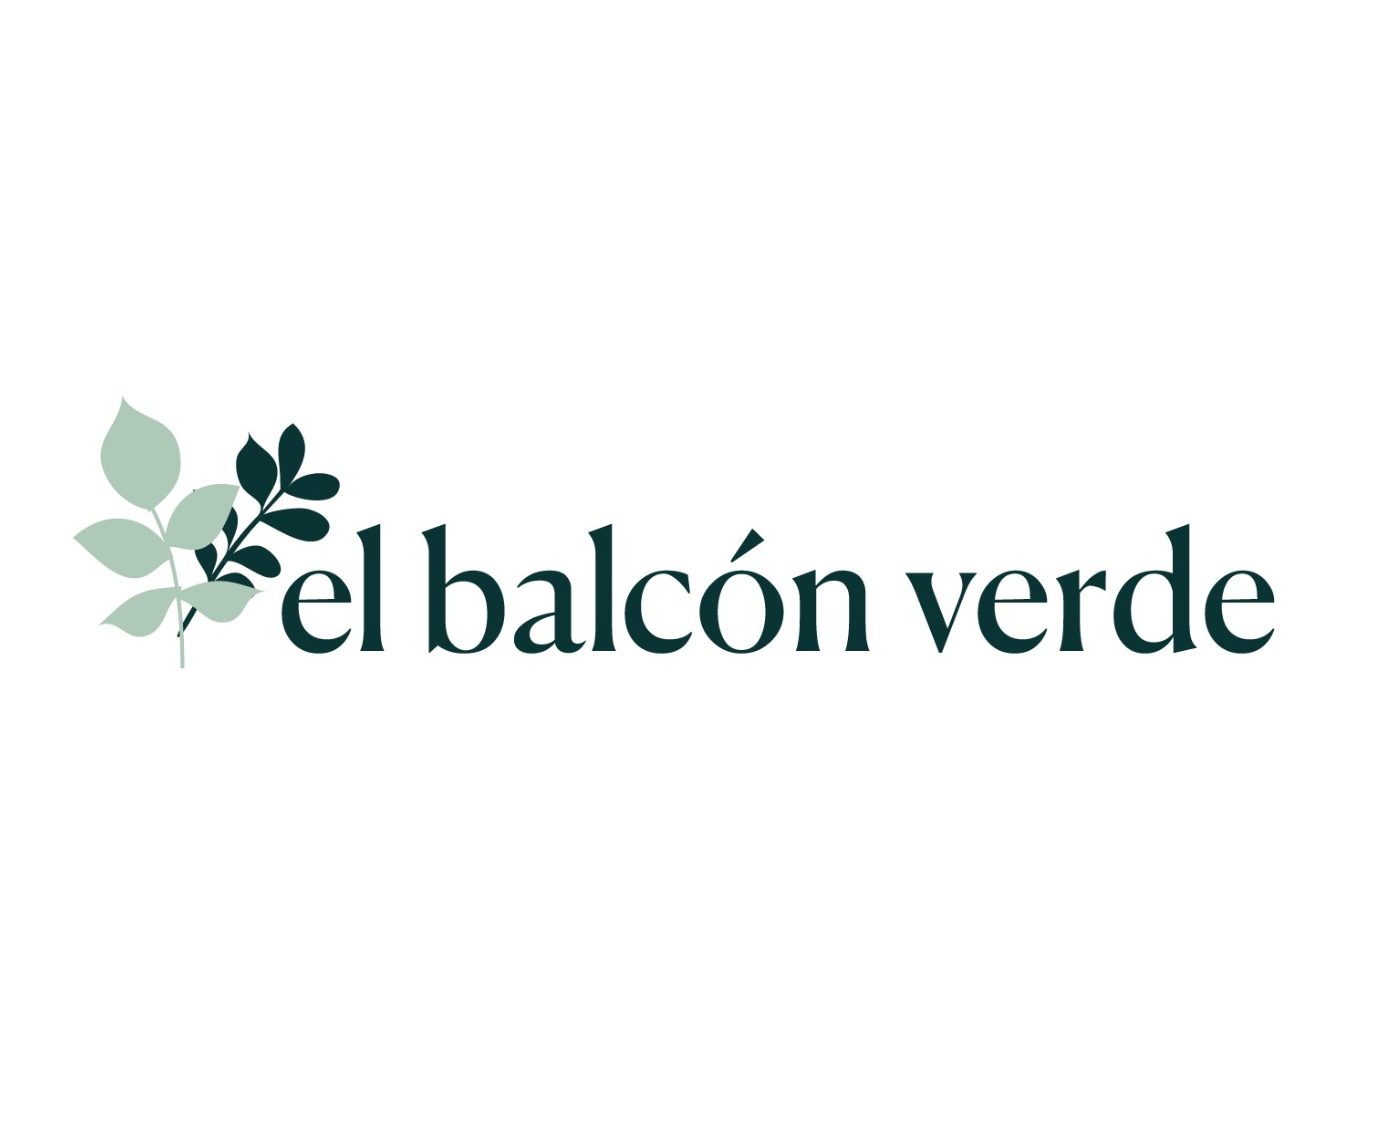 balcon verde branding cris b